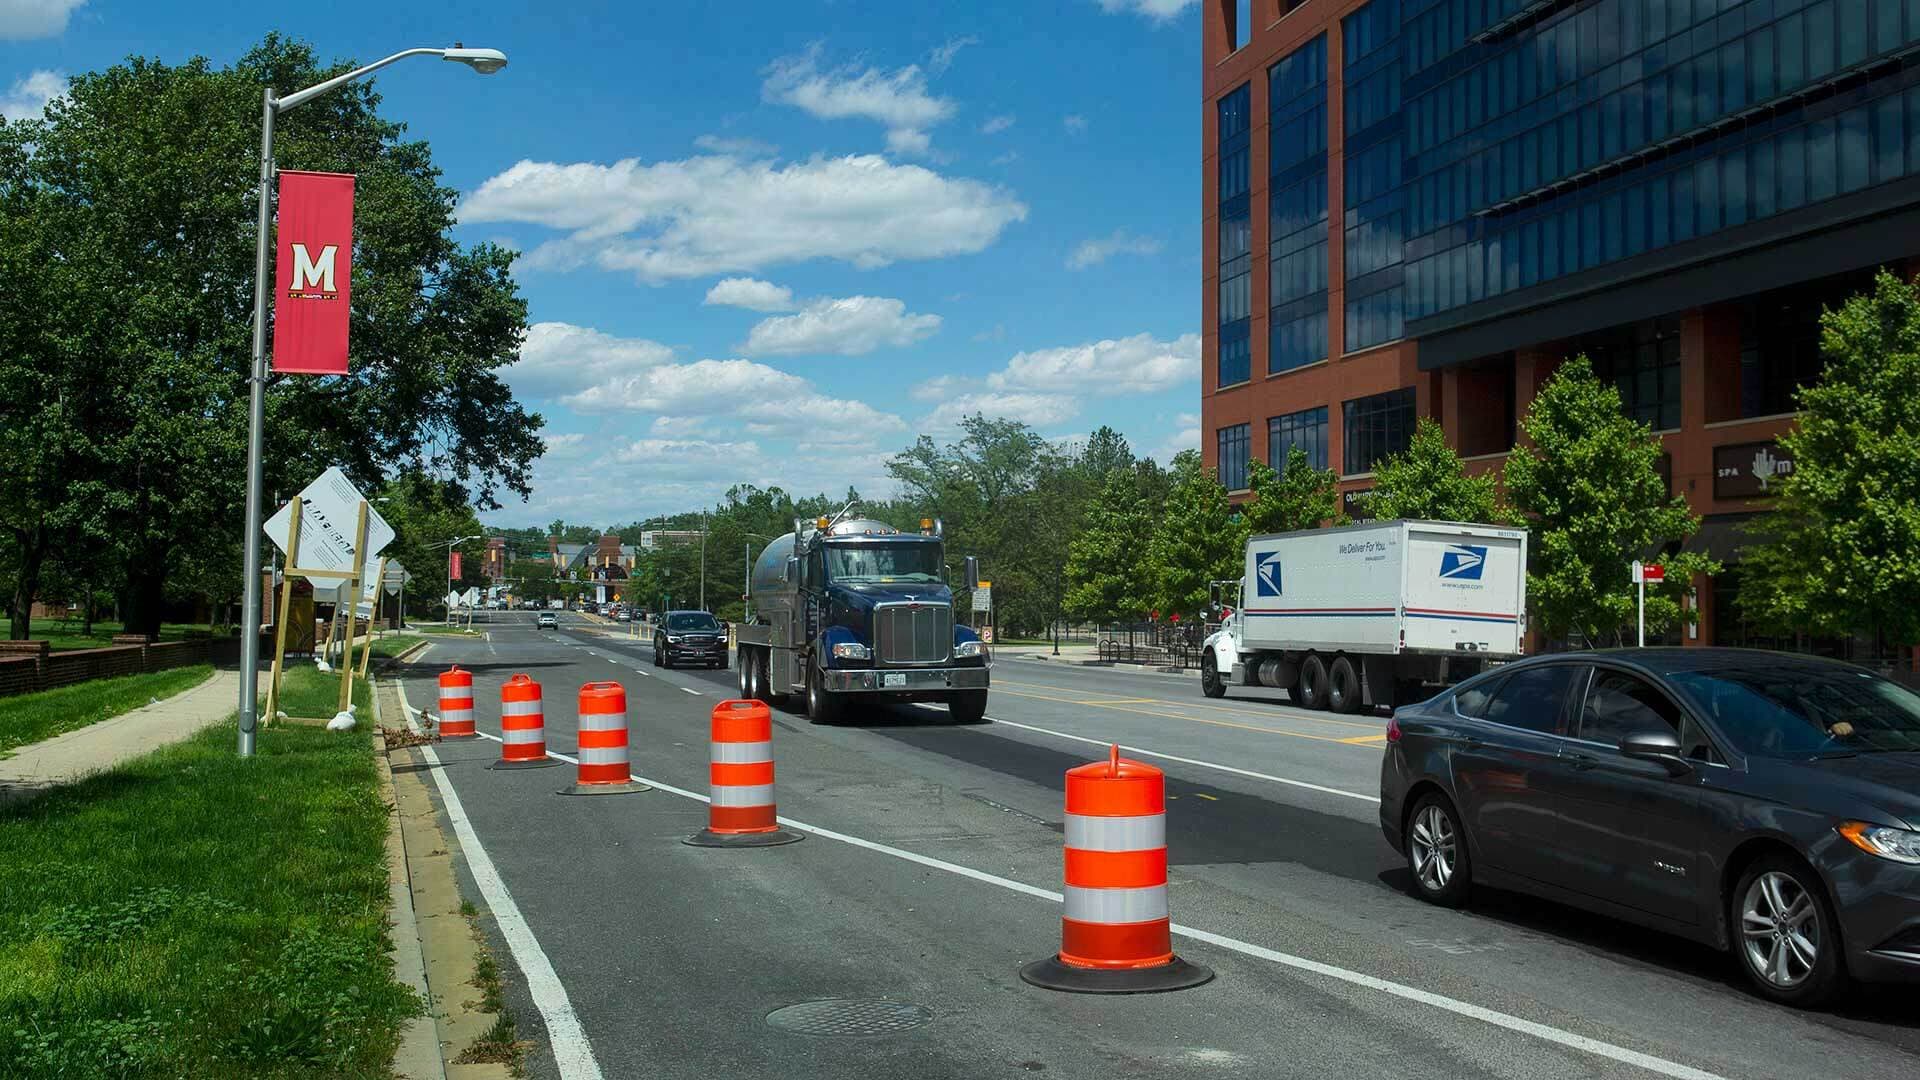 Baltimore Avenue with orange construction barrels